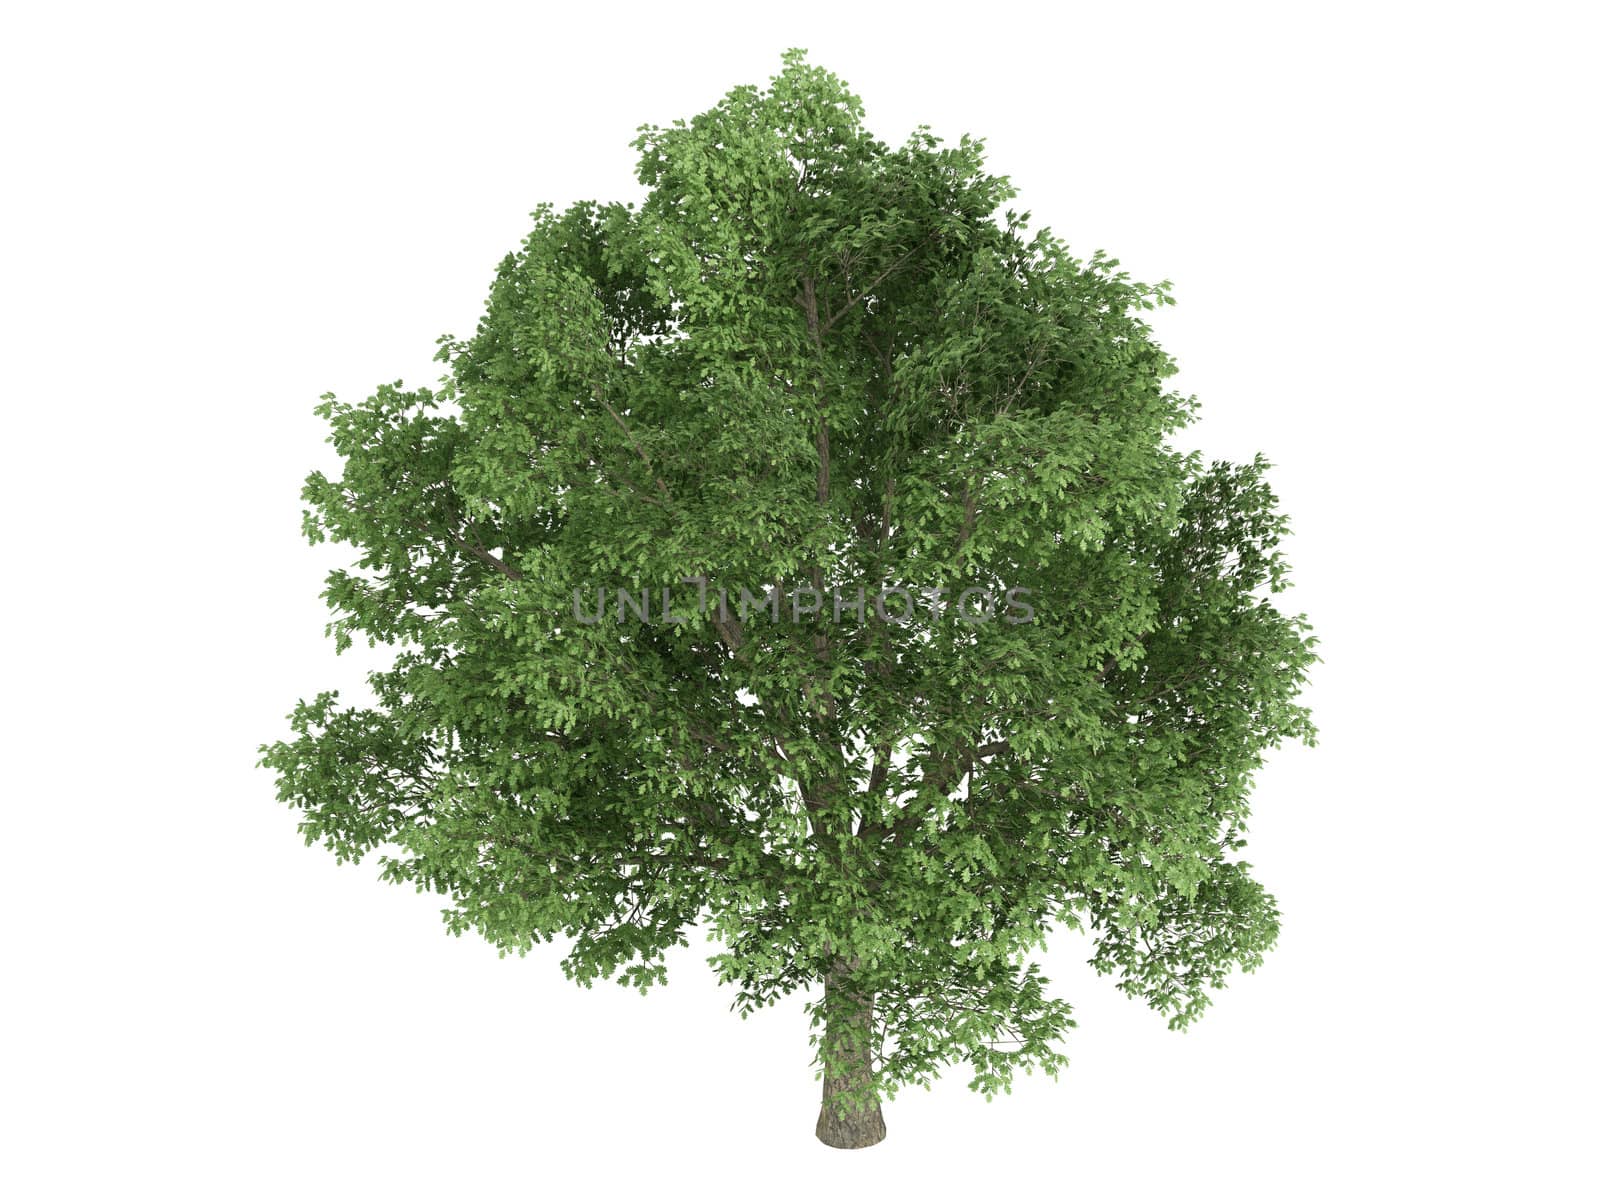 Oak or Quercus robur by AlexanderMorozov